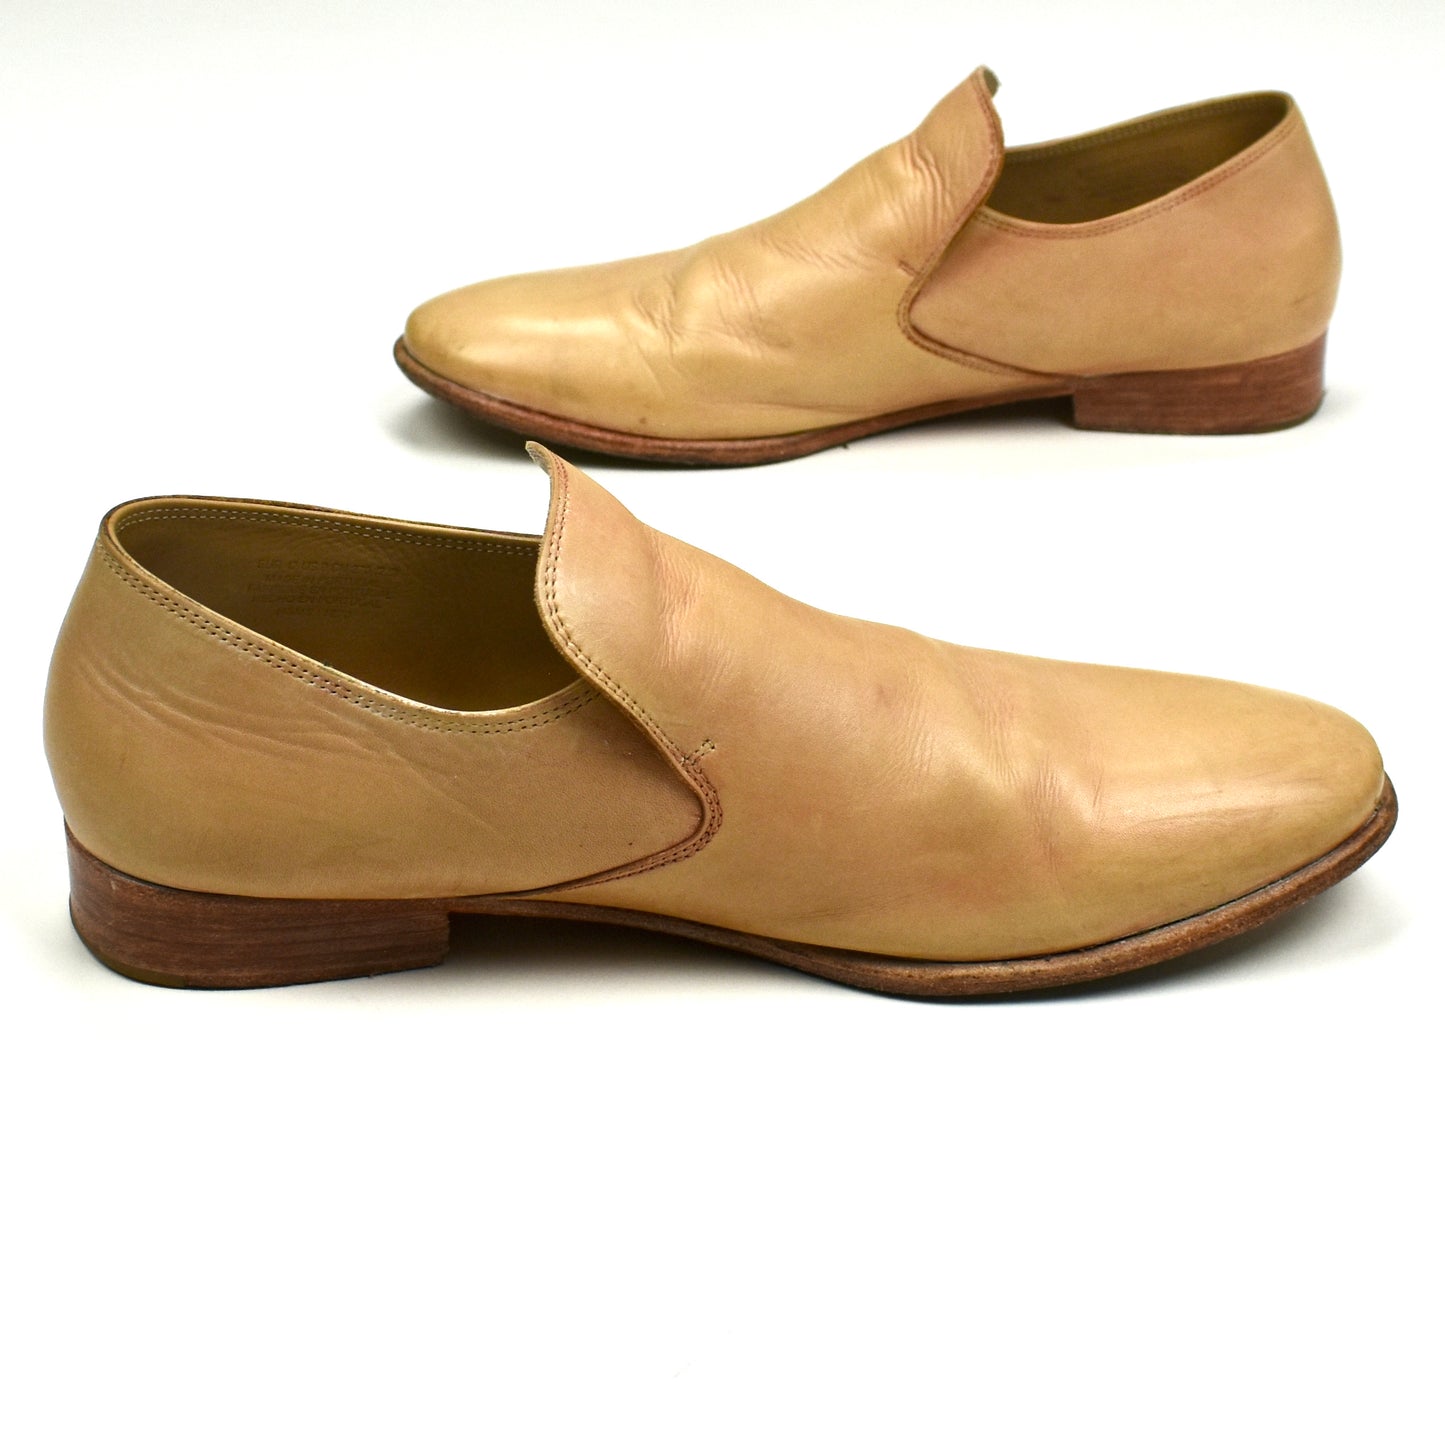 Maison Margiela x H&M - Tan Leather Mould Effect Loafers